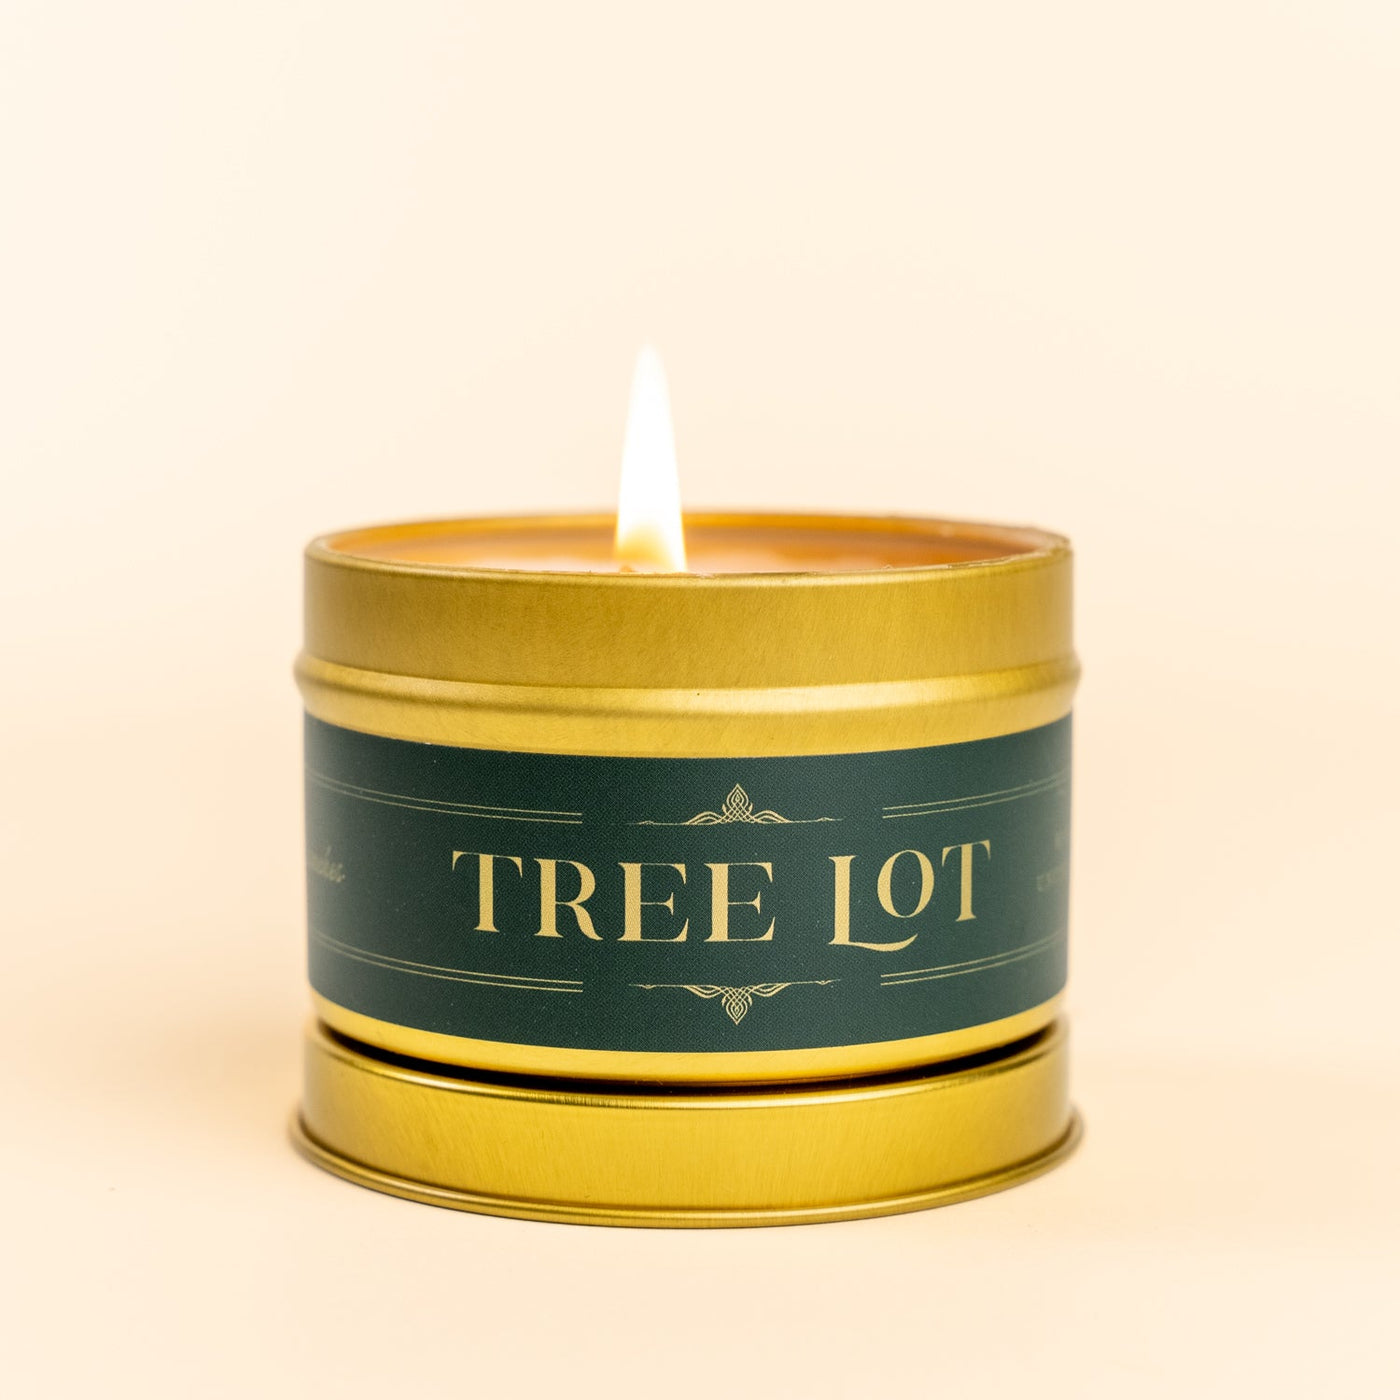 Tree Lot 4 oz. Candle